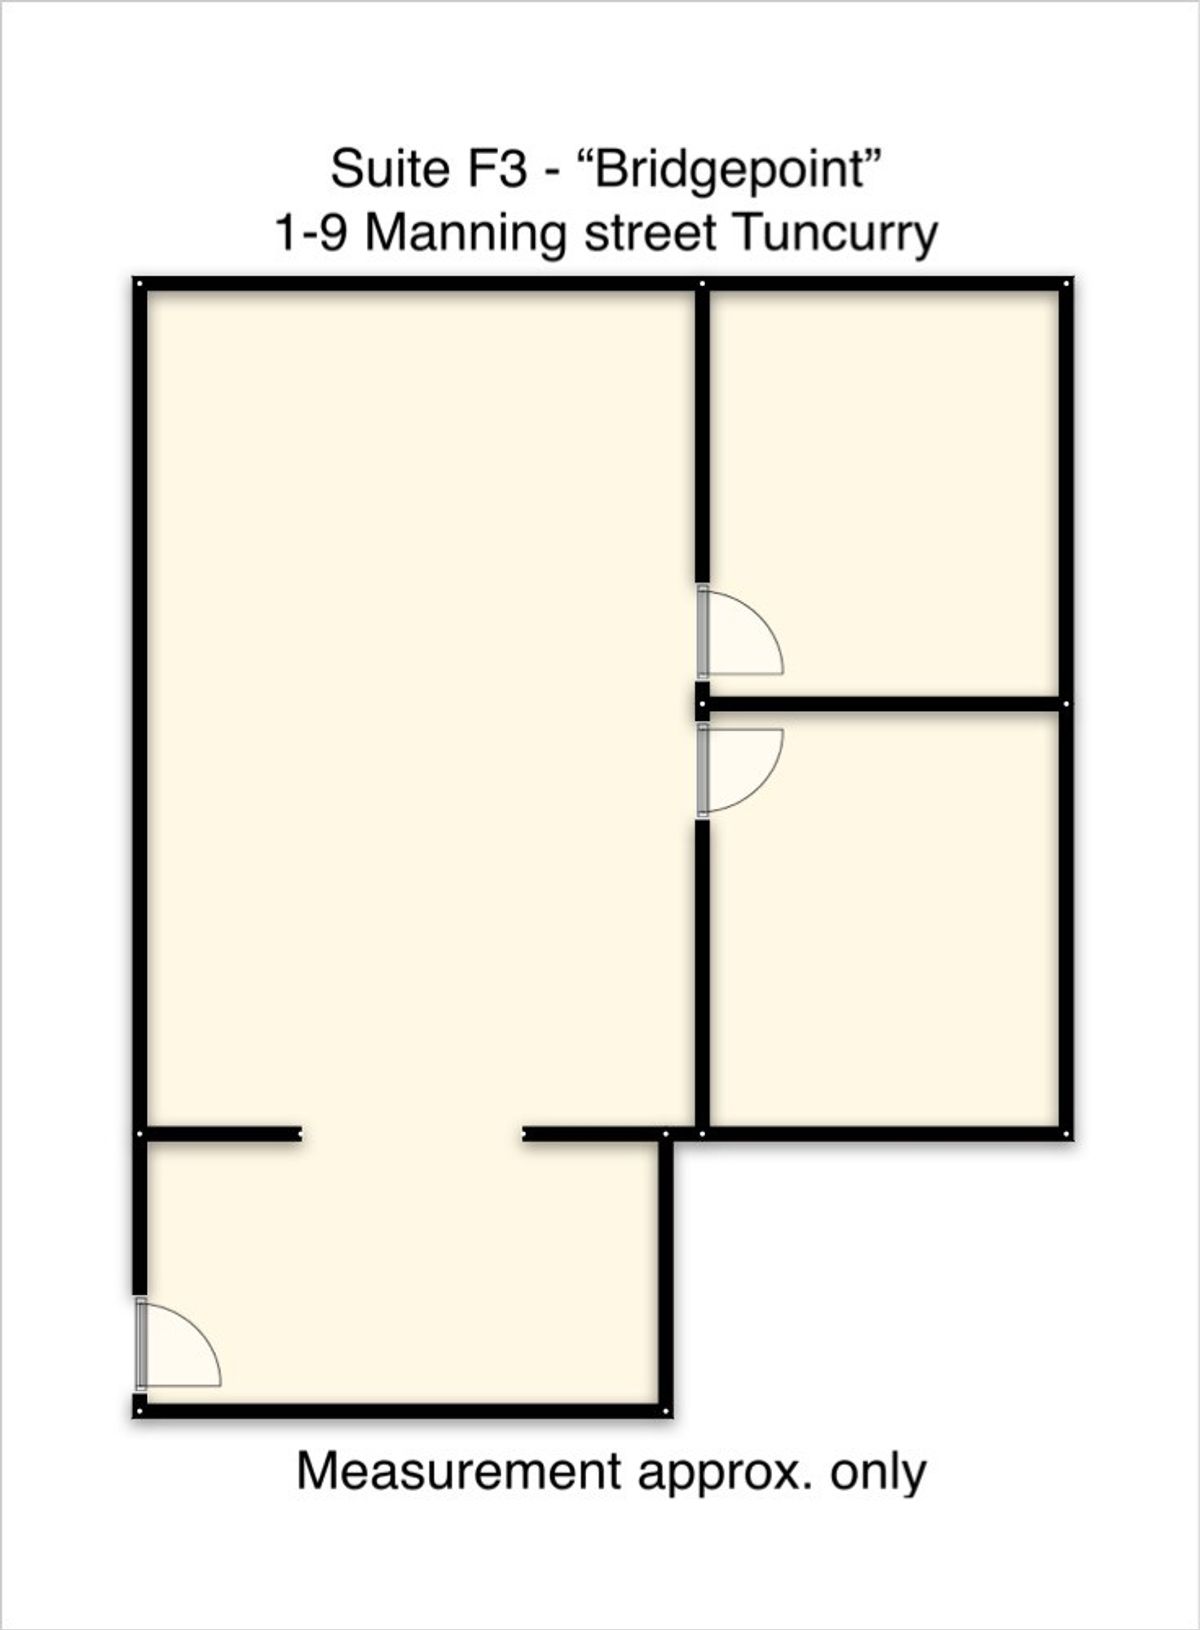 2023 11 17   Floor Plan   Suite F3 Bridgepoint Tuncurry